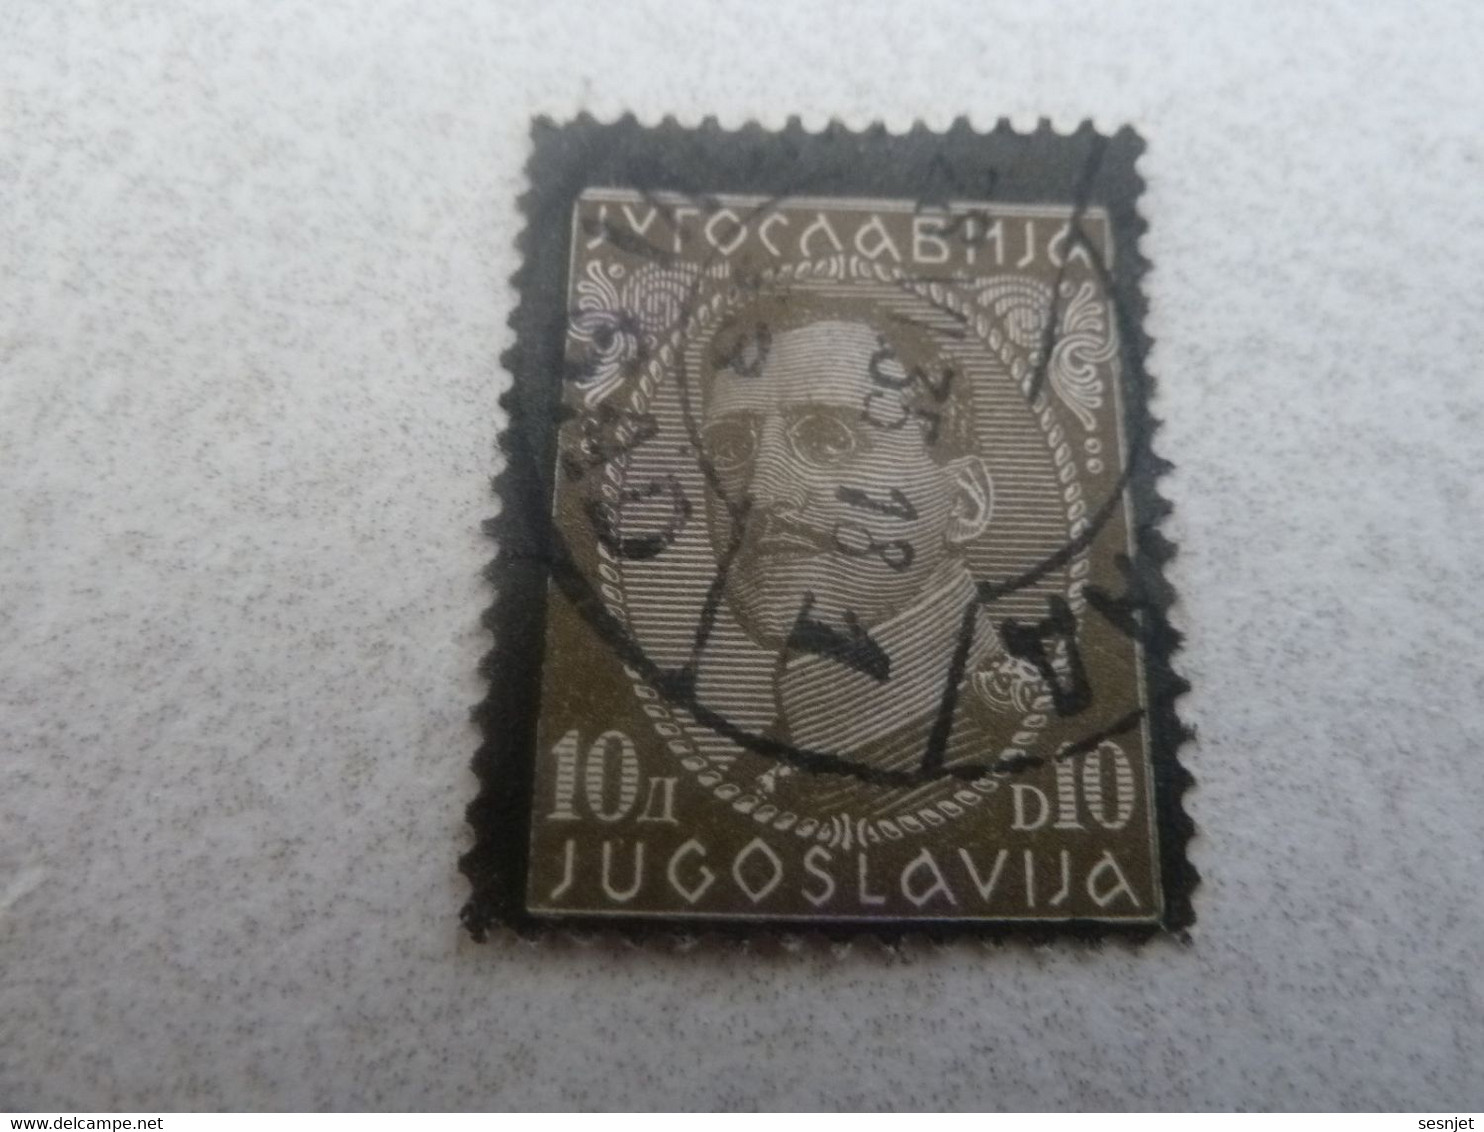 Jyrocnabnja - Yugoslavija - Roi Alexandre Cadré Noir - Val 10 D - Brun - Oblitéré - Année 1933 - - Used Stamps